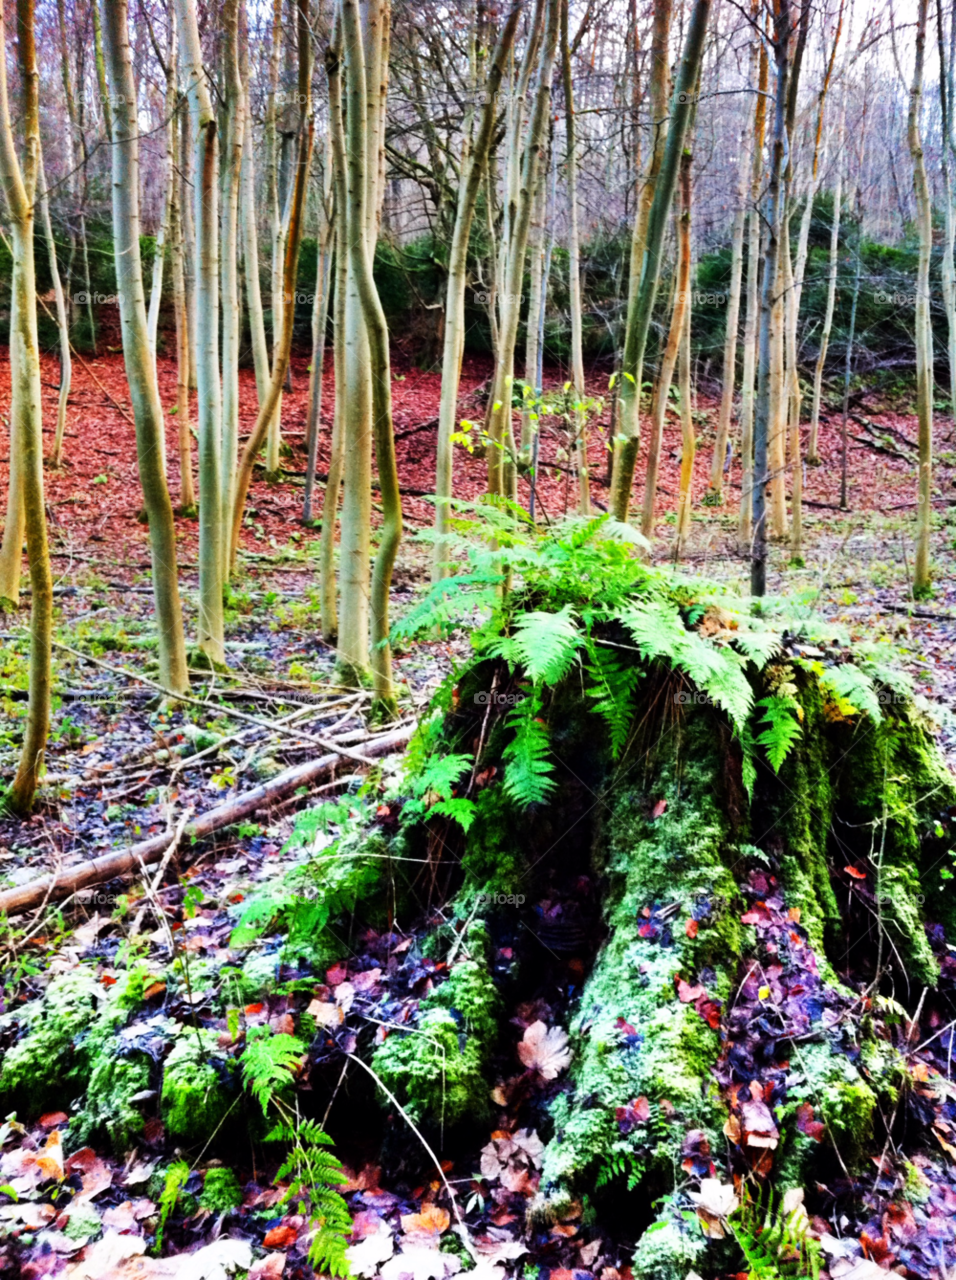 norbury woods surrey england uk winter green orange by empireog